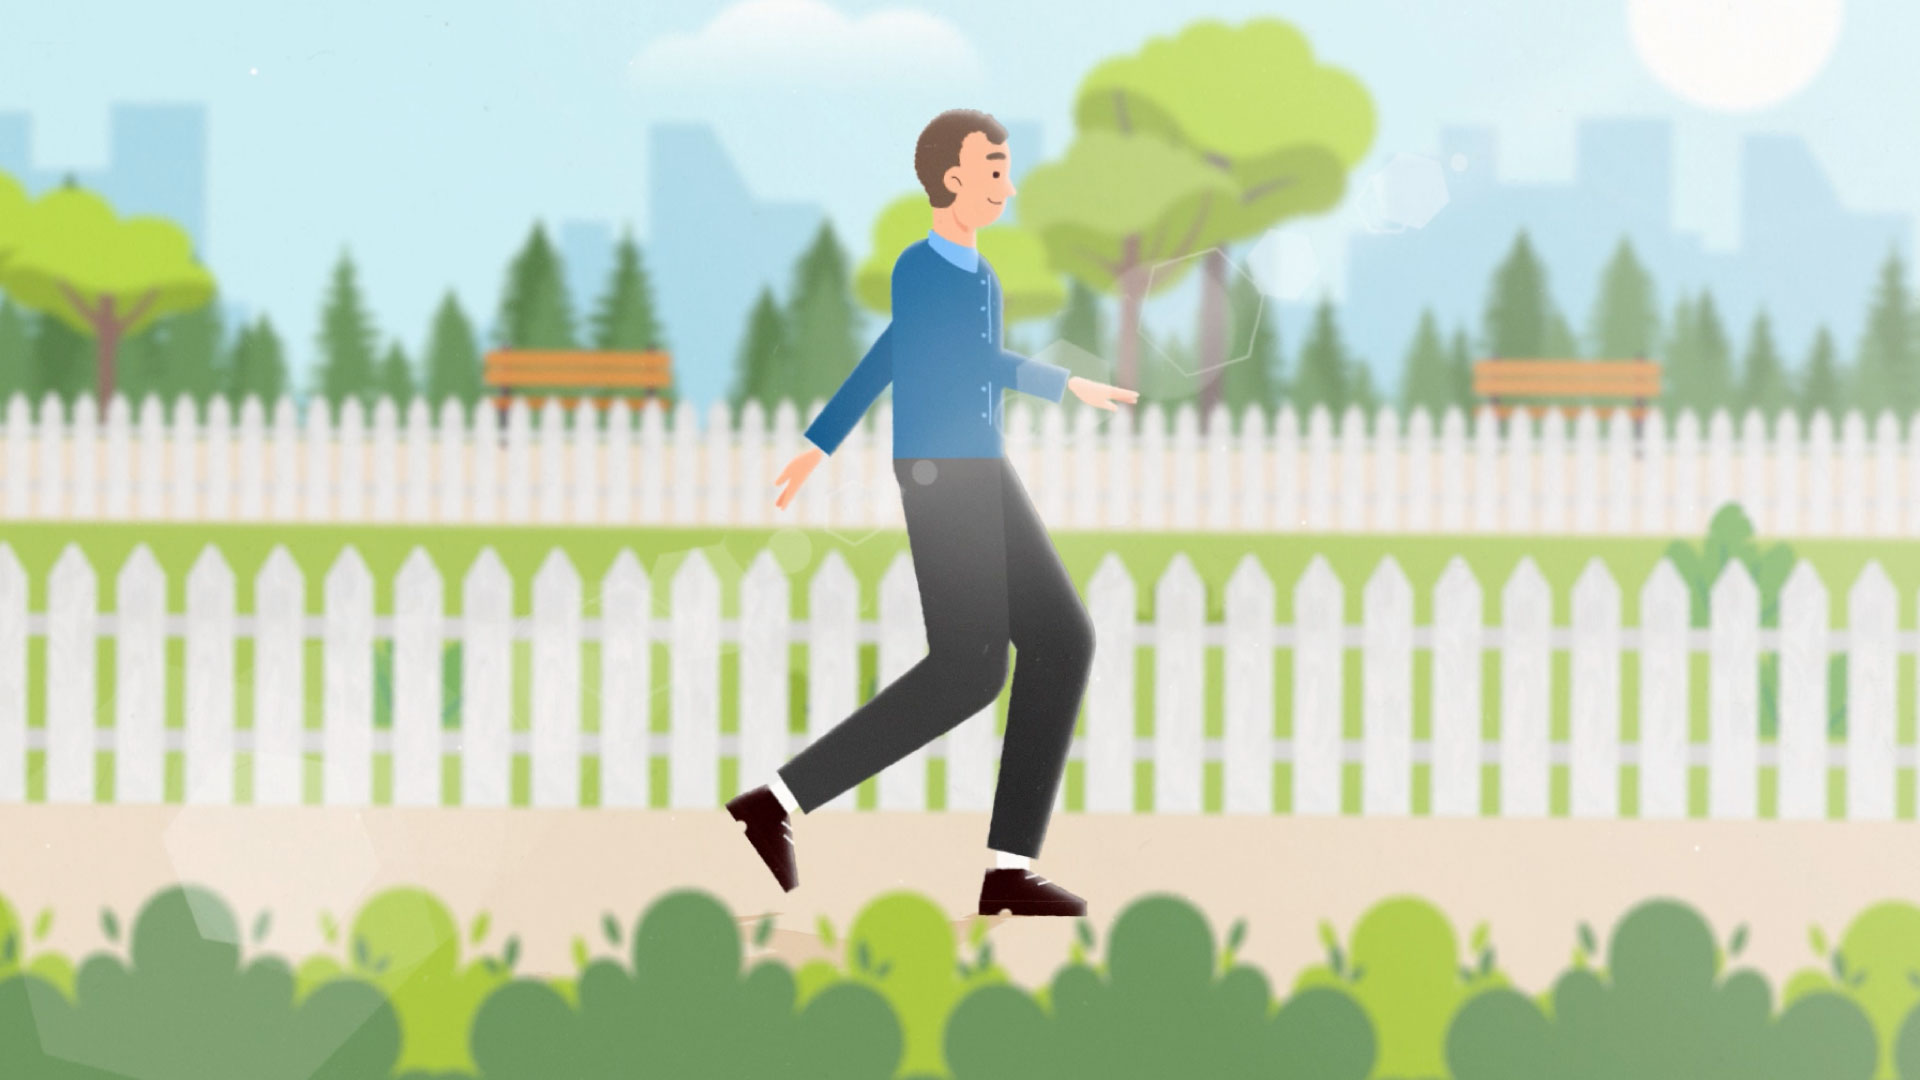 Animated character walking